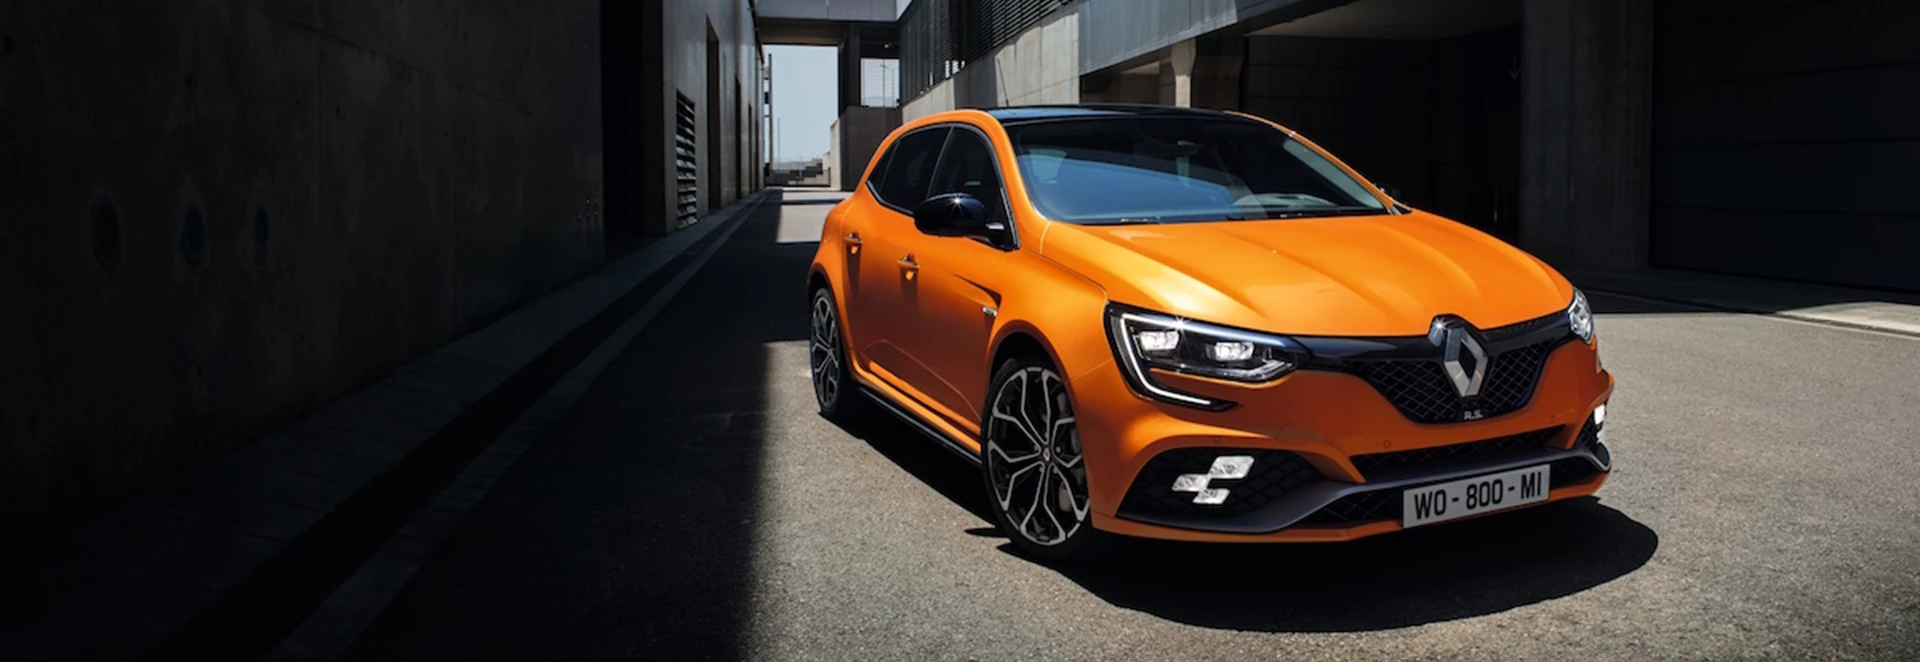 Renault reveals new Megane Renault Sport 